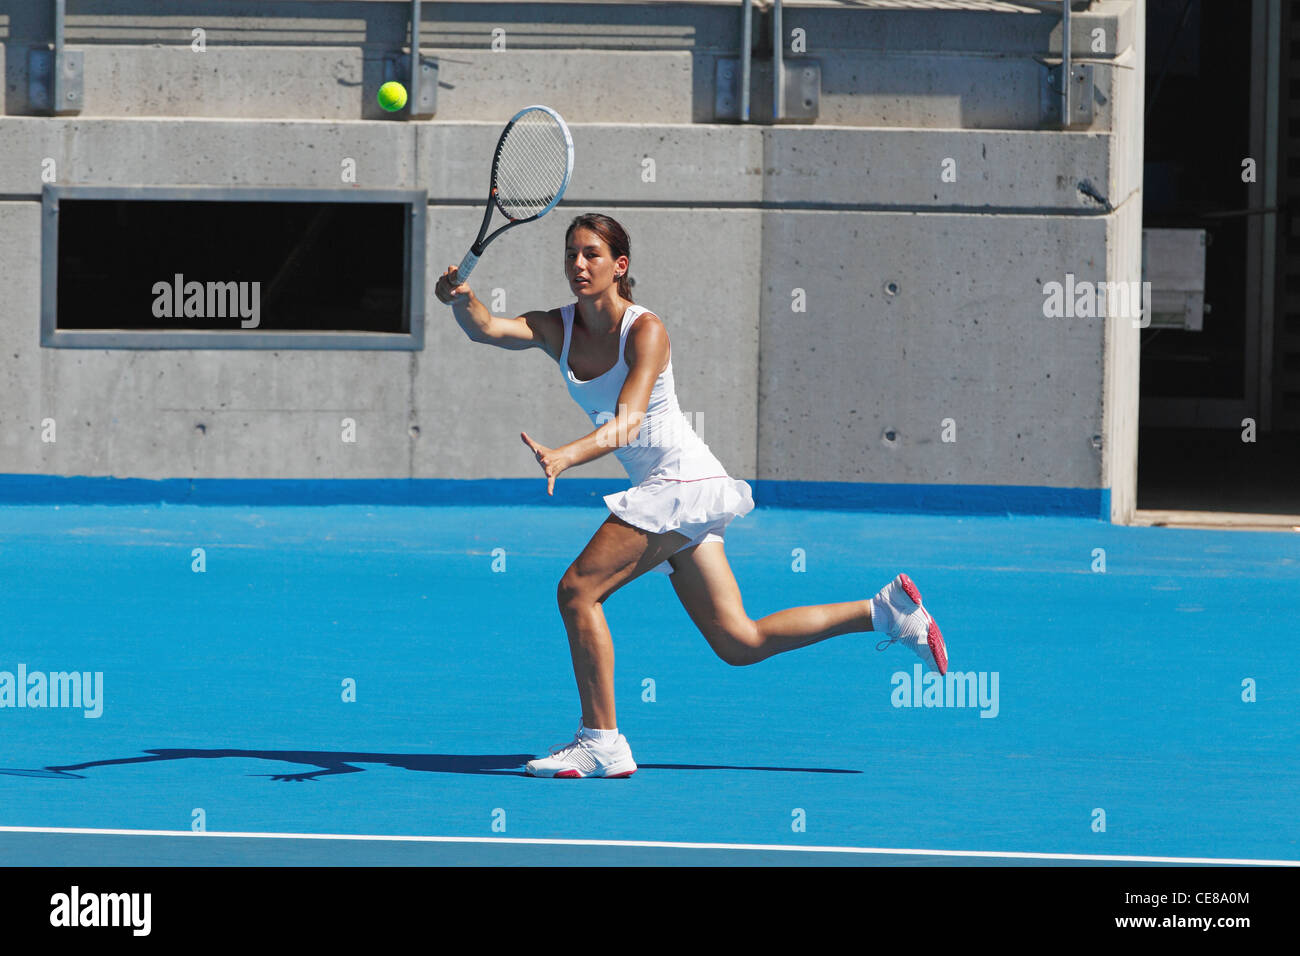 Joven Jugador de tenis femenino Foto de stock